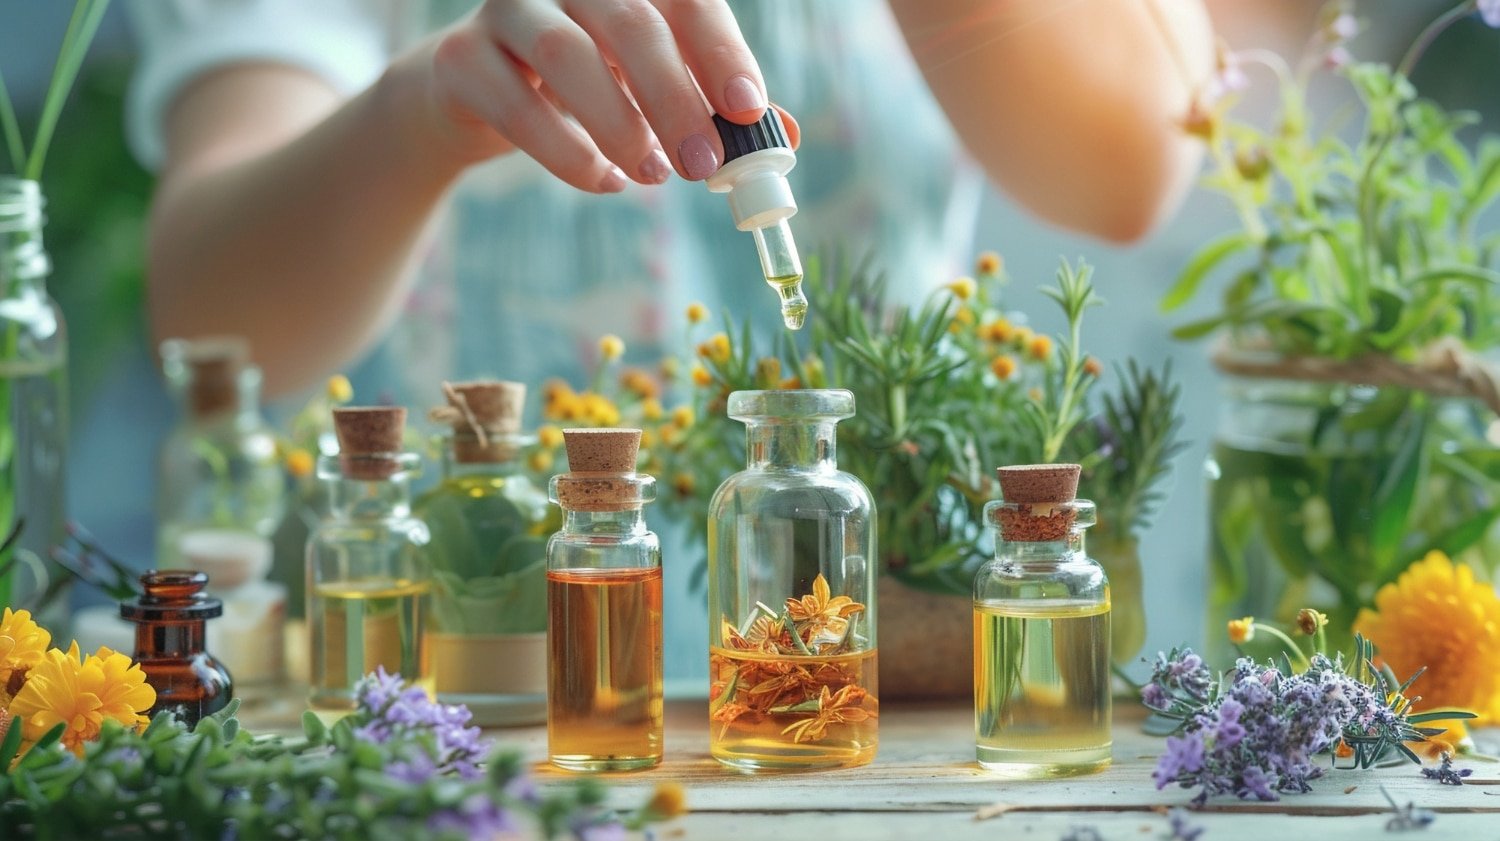 Discover Natural Remedies At Farmacia Guacci’s Traditional Pharmacy